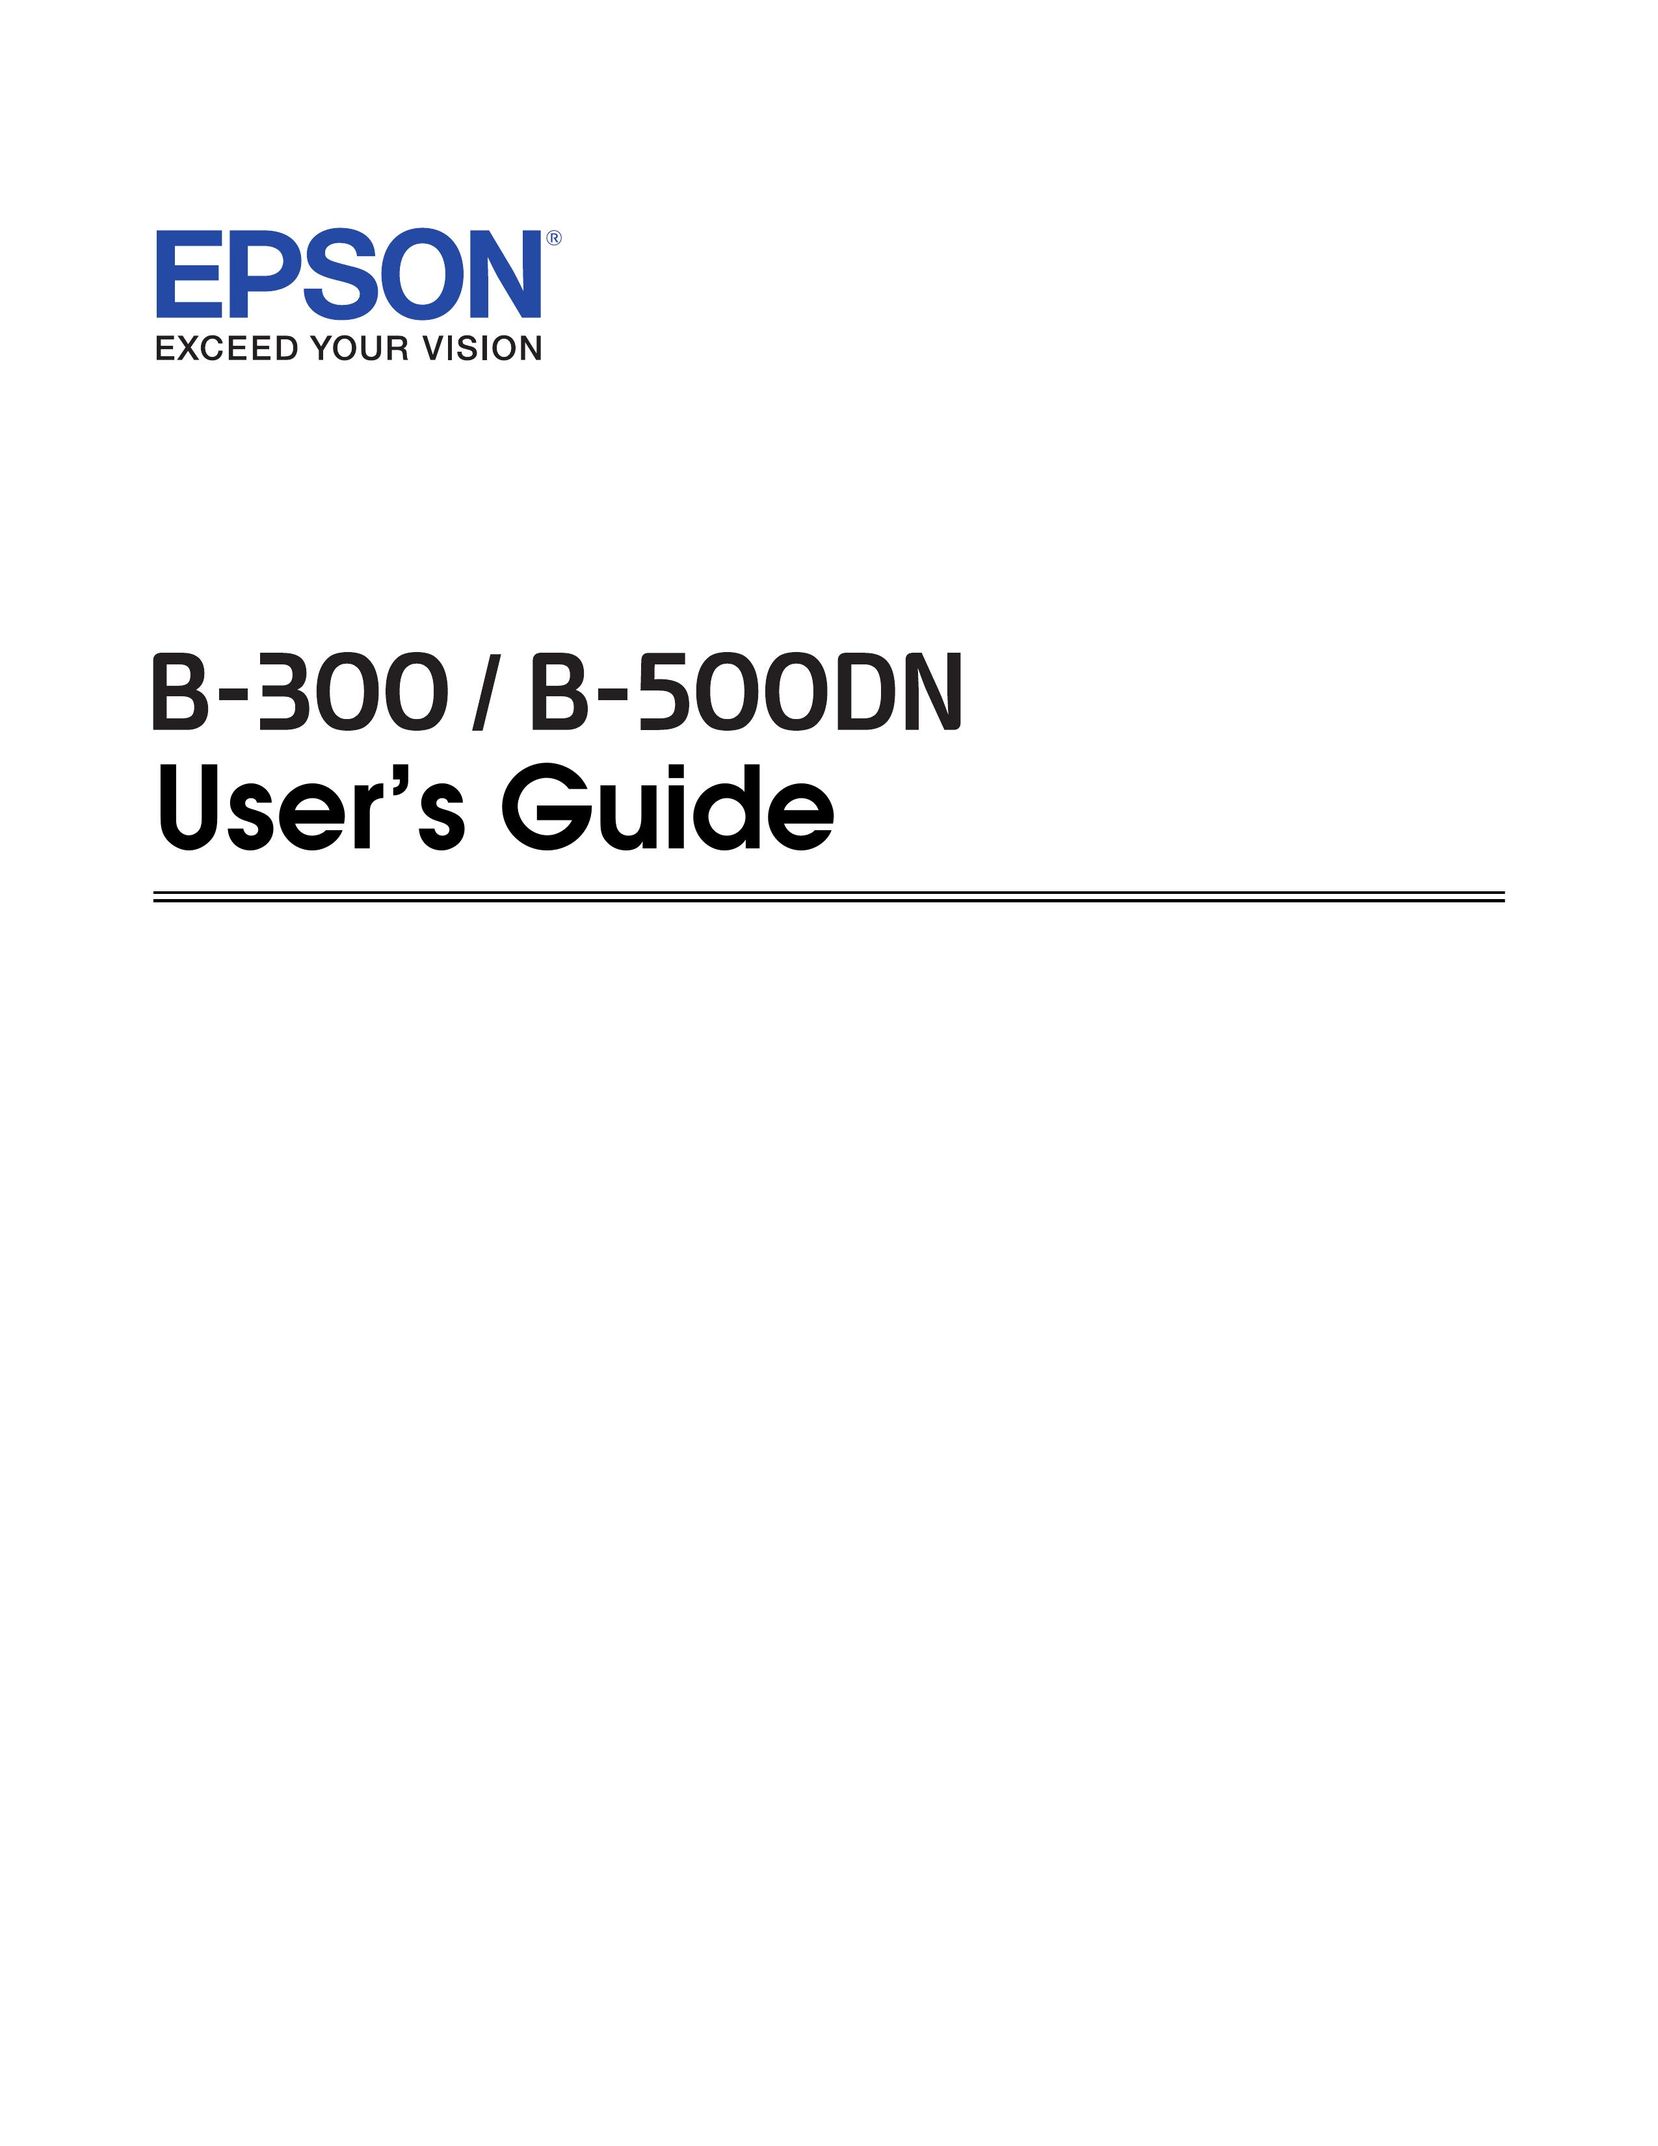 Falcon B-300 Printer User Manual